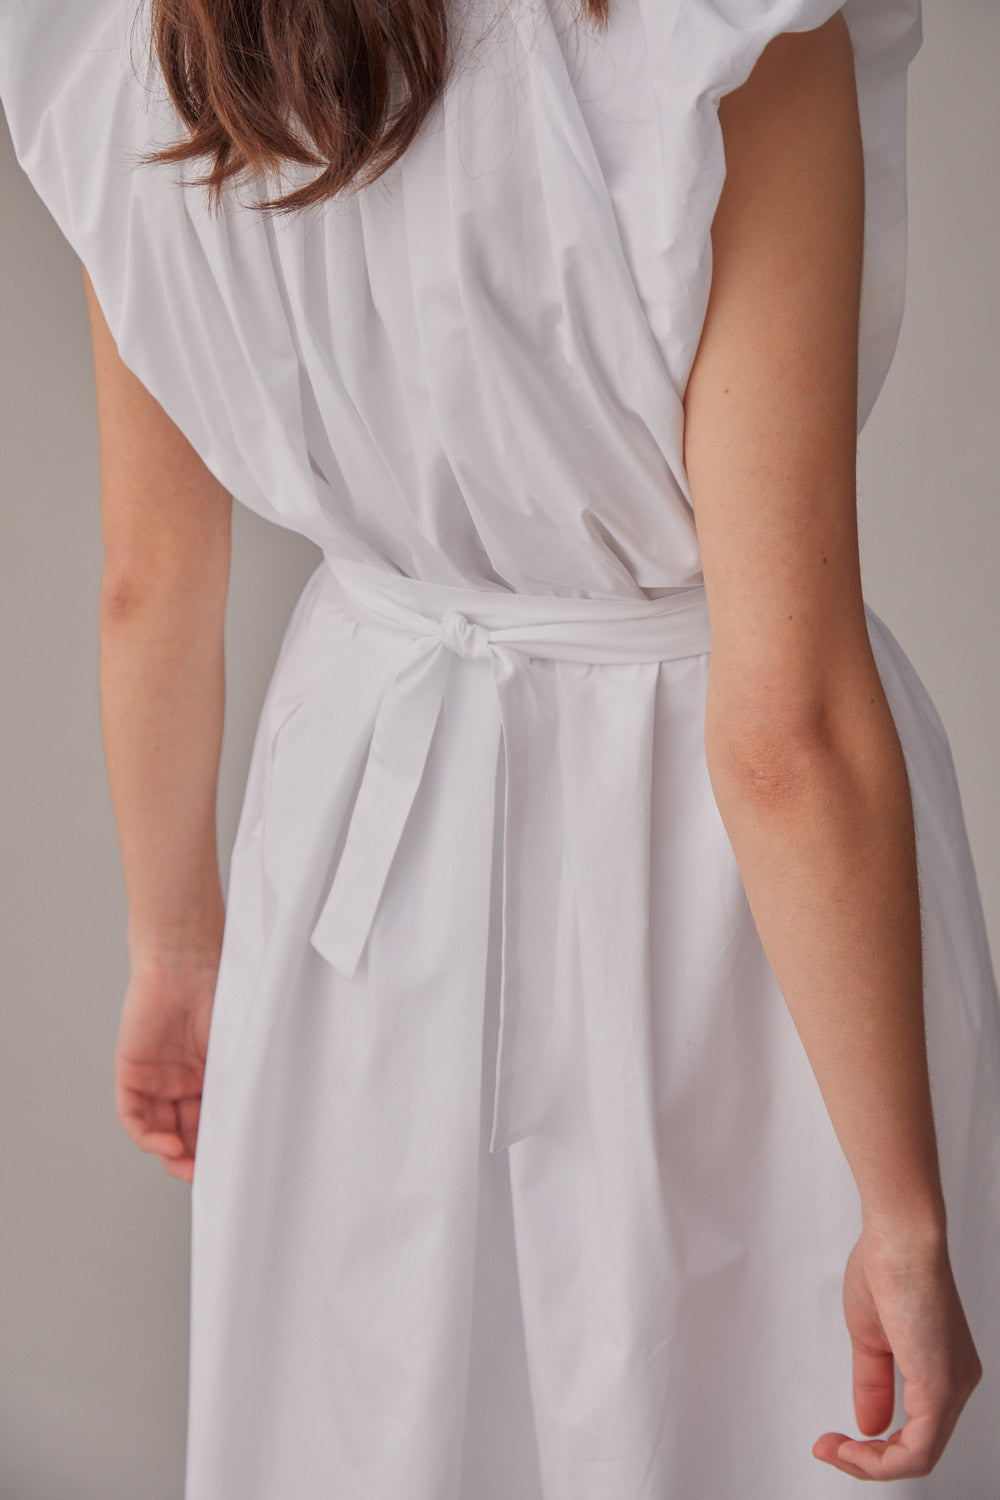 The White Dress 02